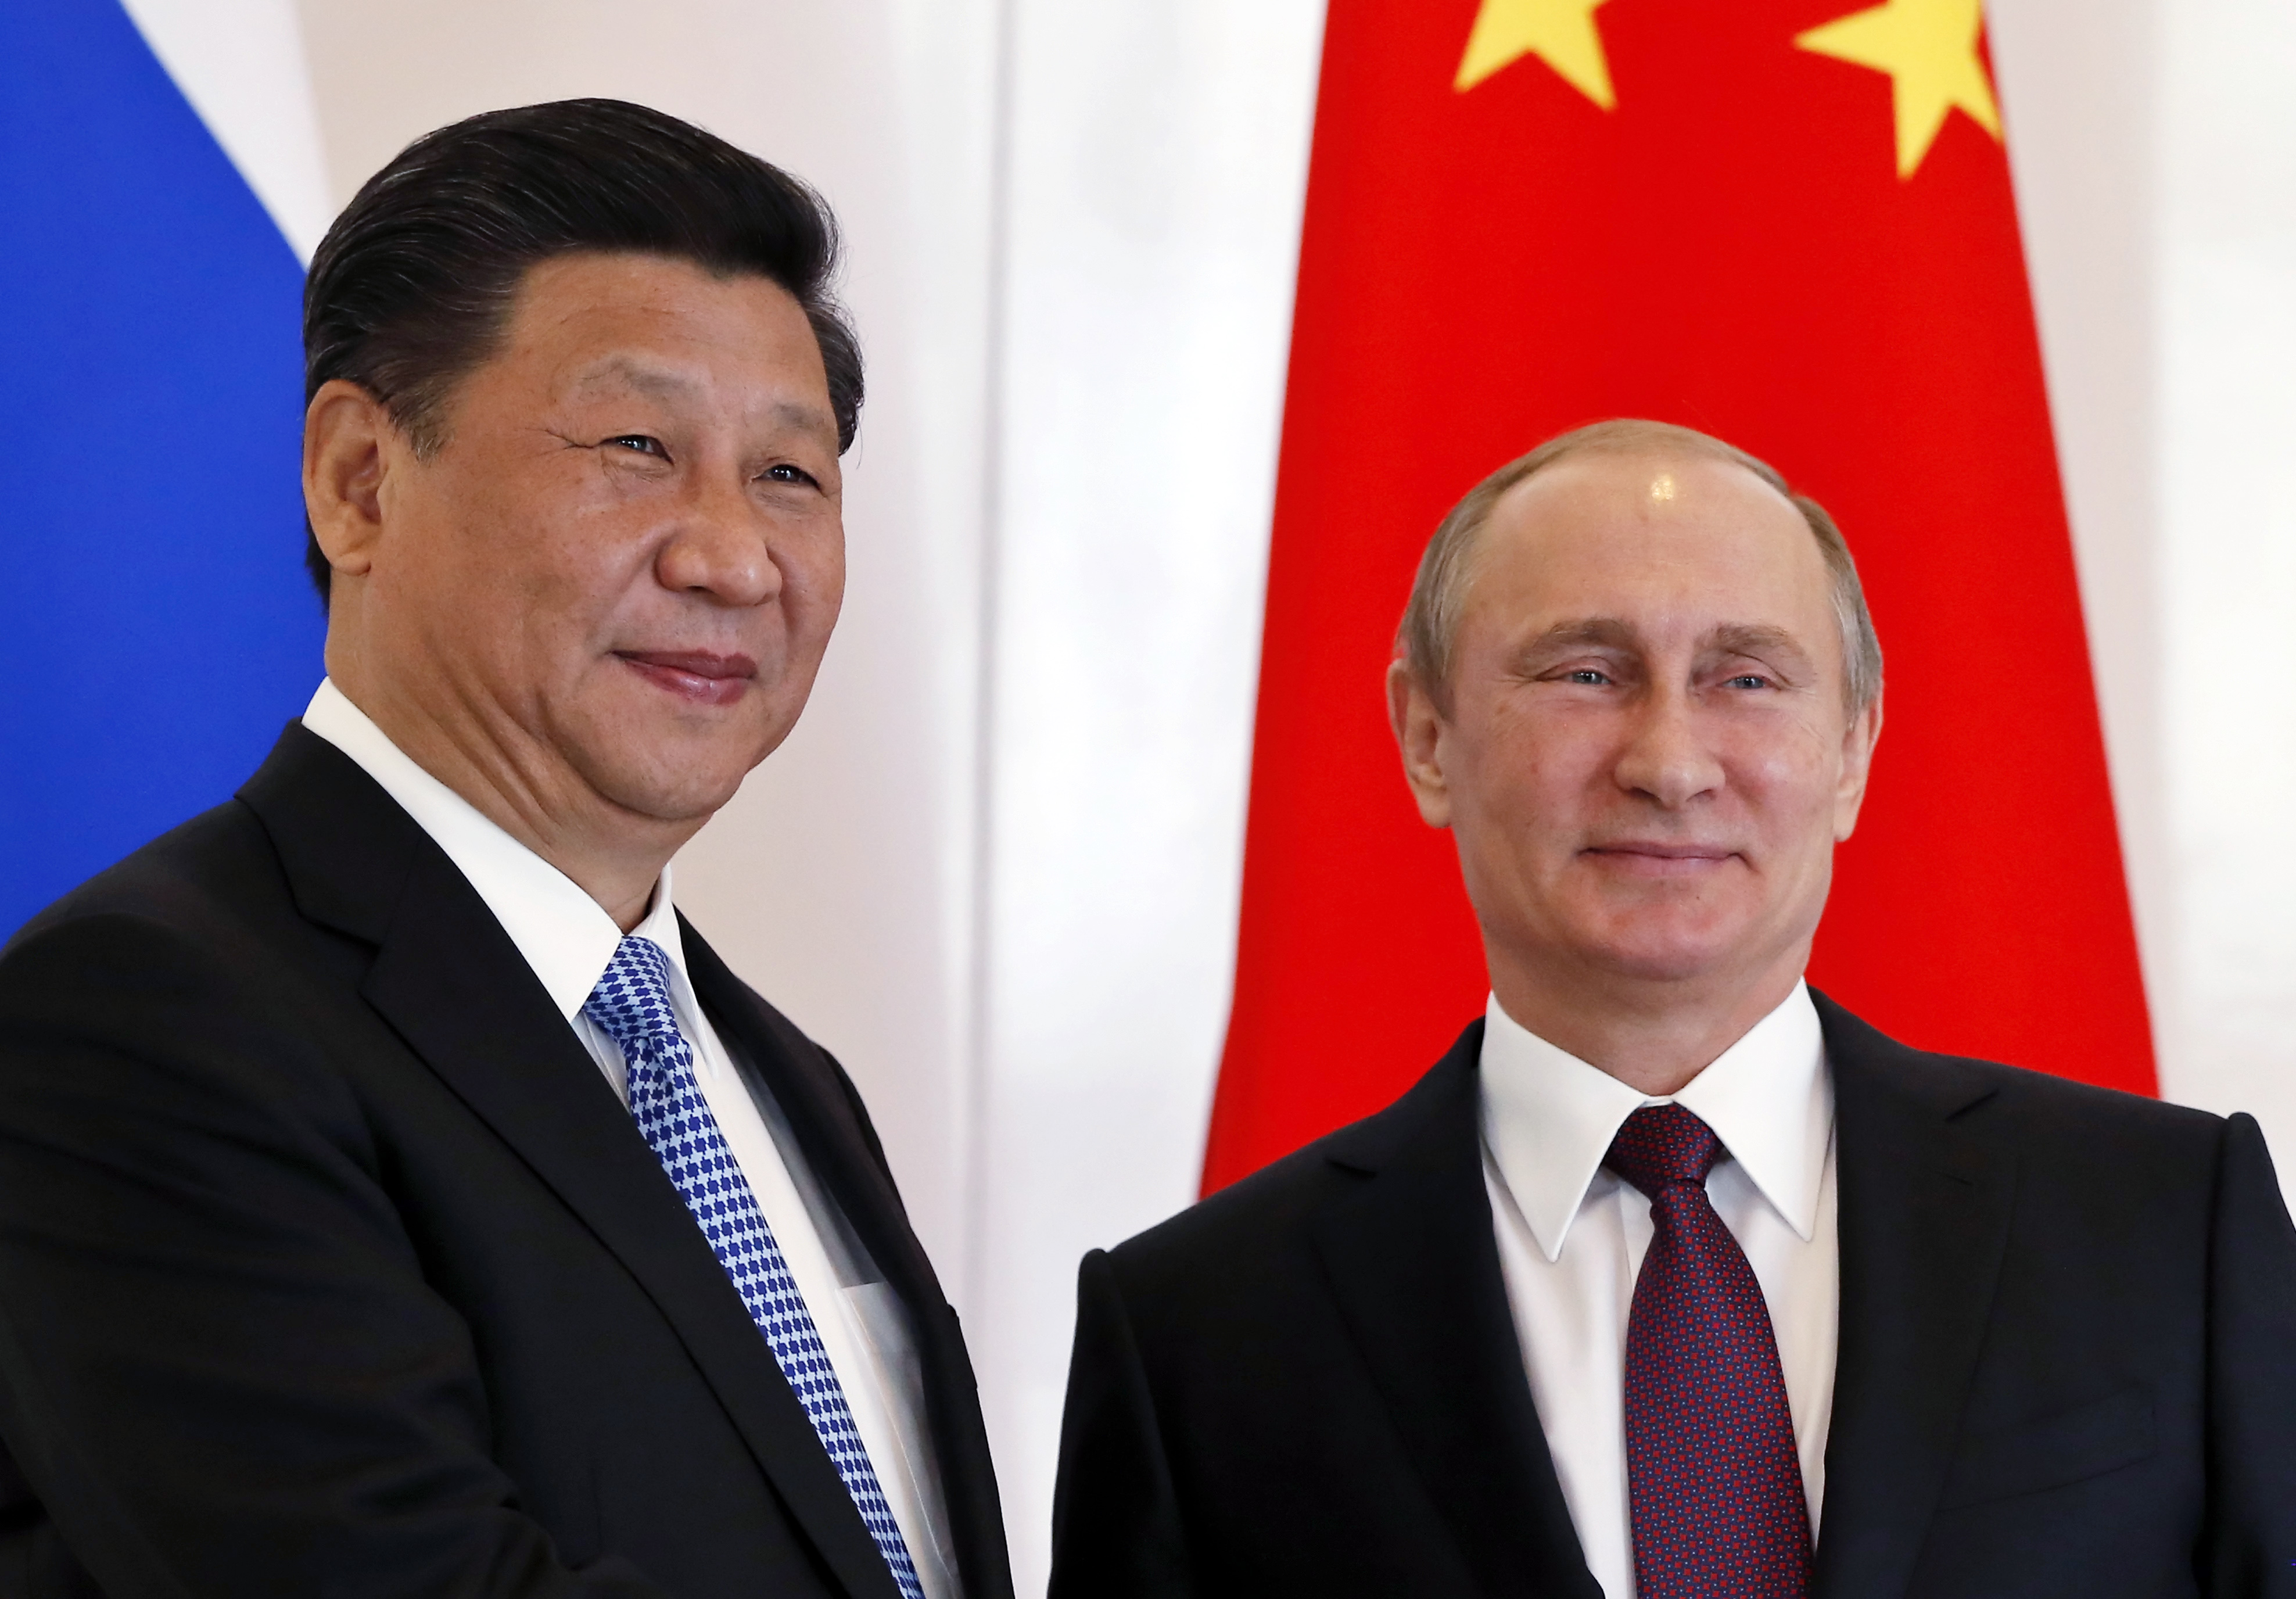 Russian President, Vladimir Putin, right, poses with Chinese President Xi Jinping during the BRICS leaders' meeting in Turkey on Nov. 15, 2015 (Yuri Kochetkov—EPA)